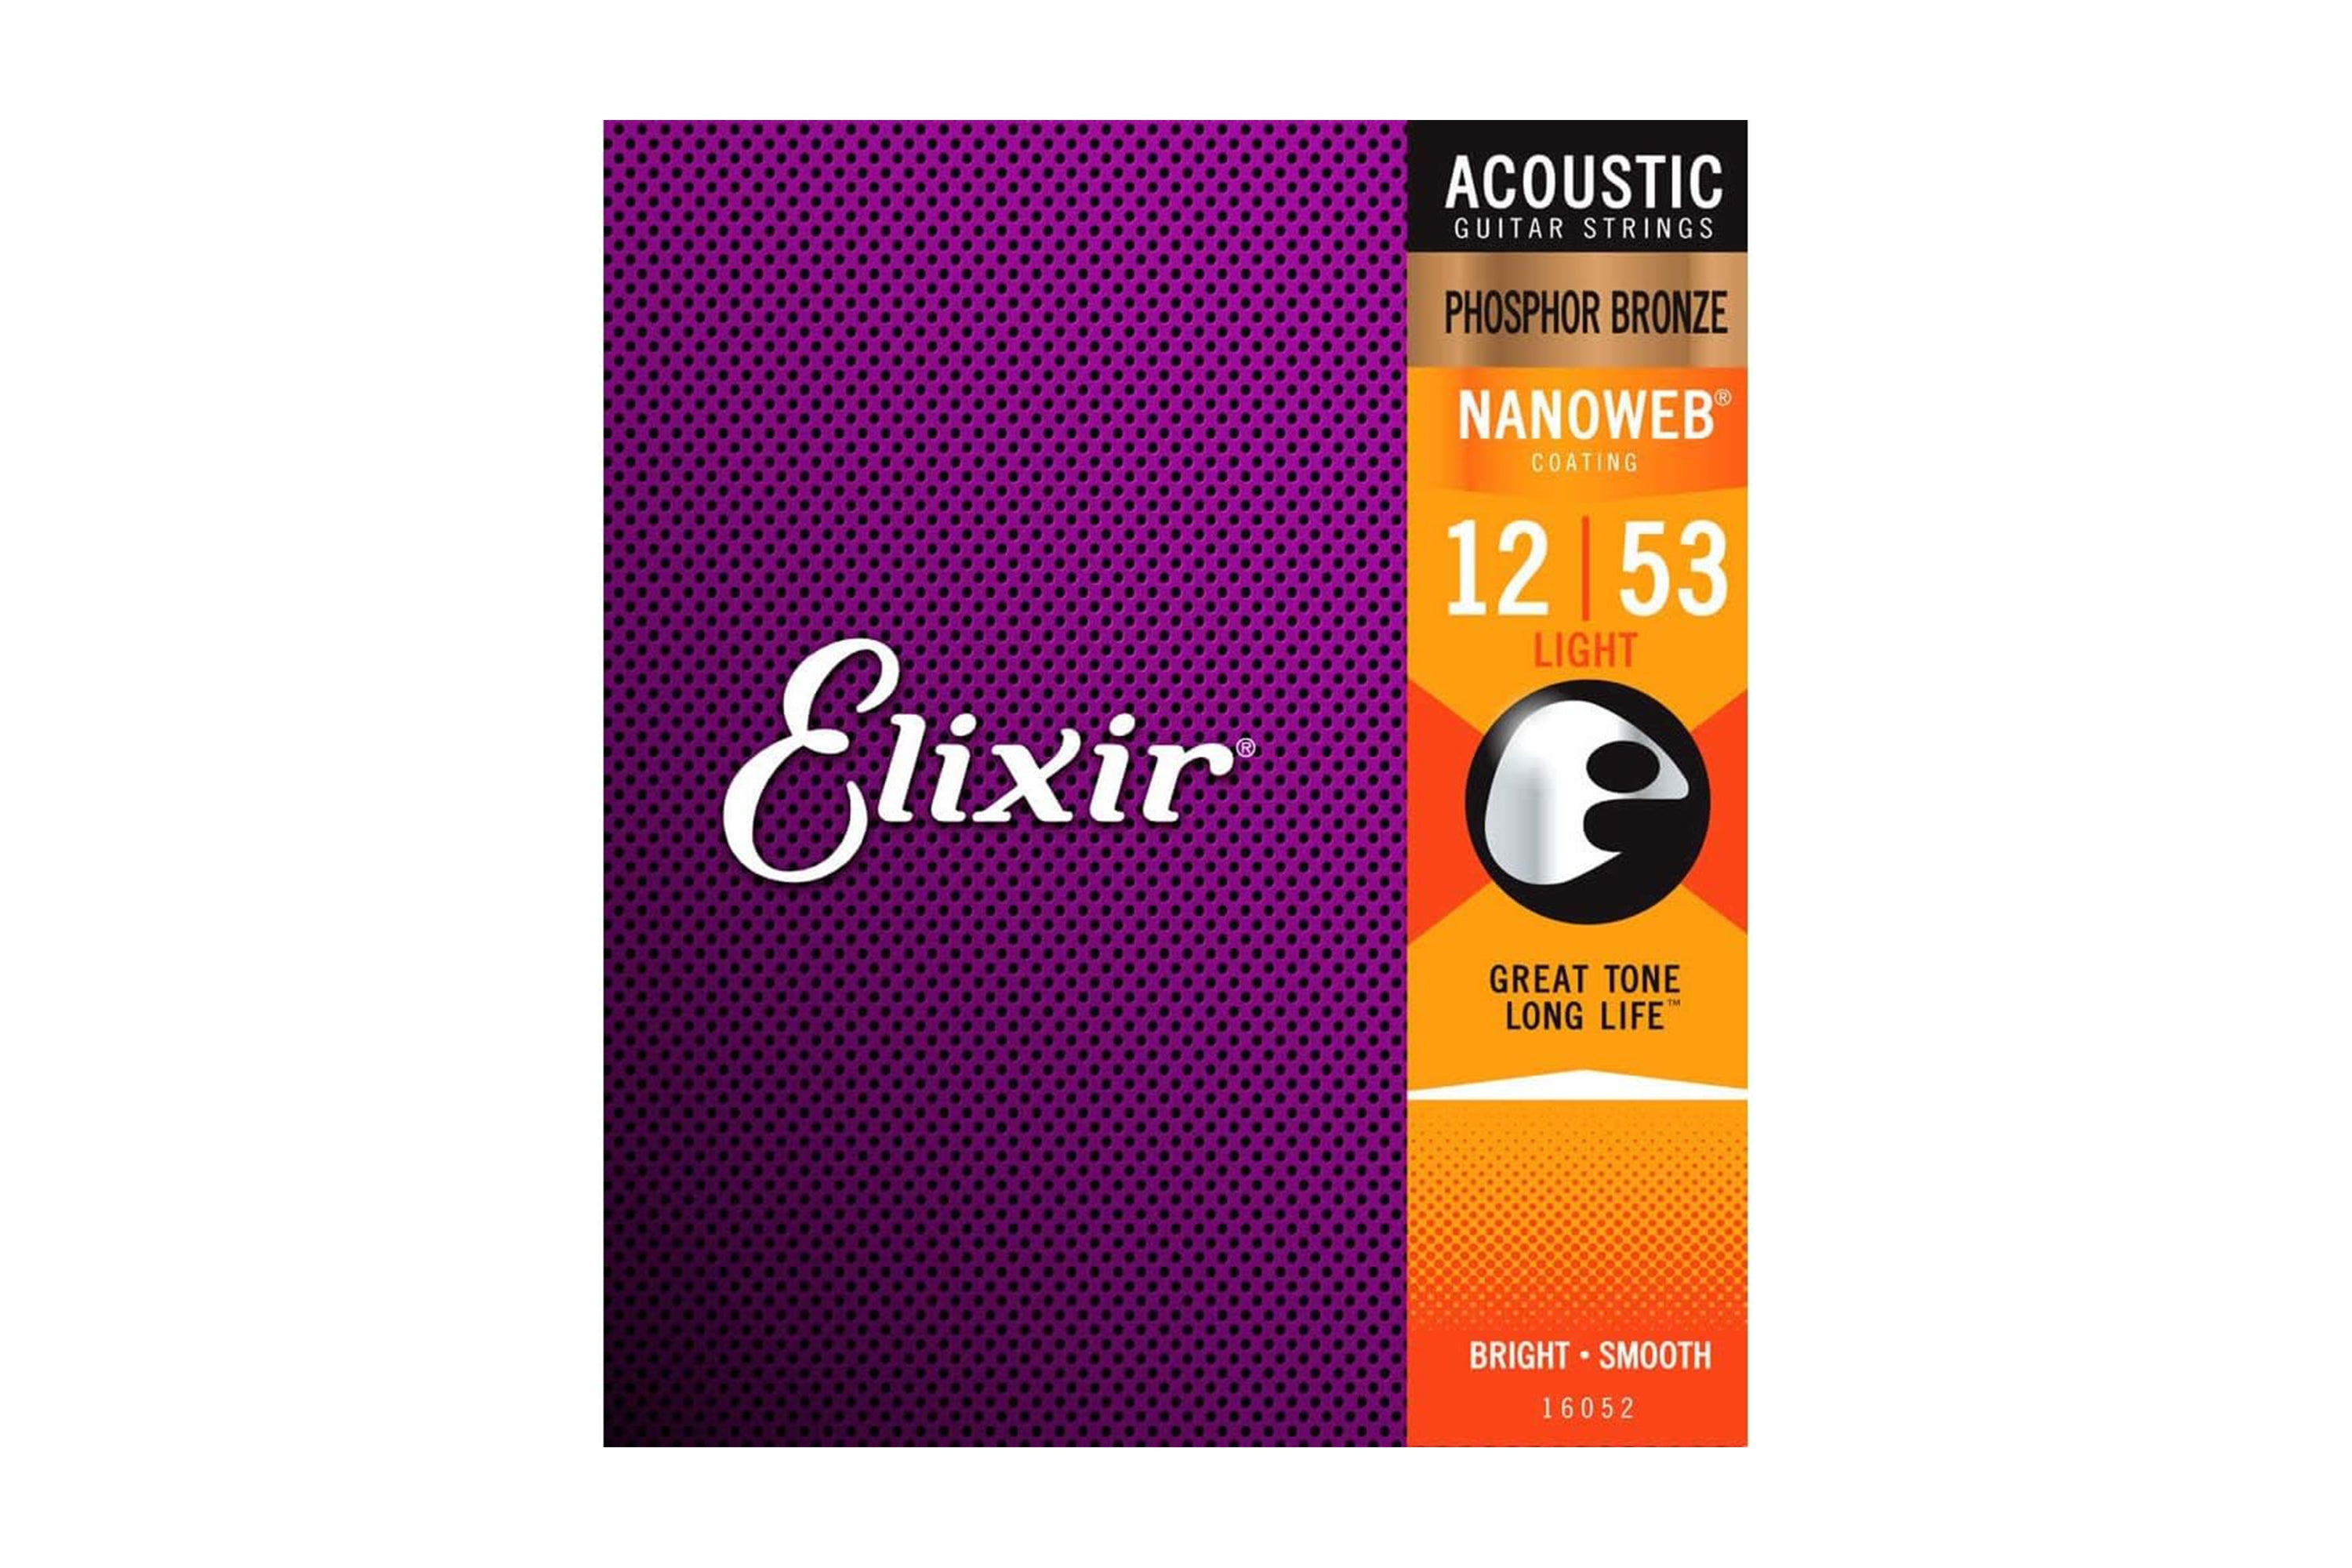 Elixir 16052 Phosphor Bronze With Nanoweb Coating Acoustic Guitar Strings - Light .012-.053